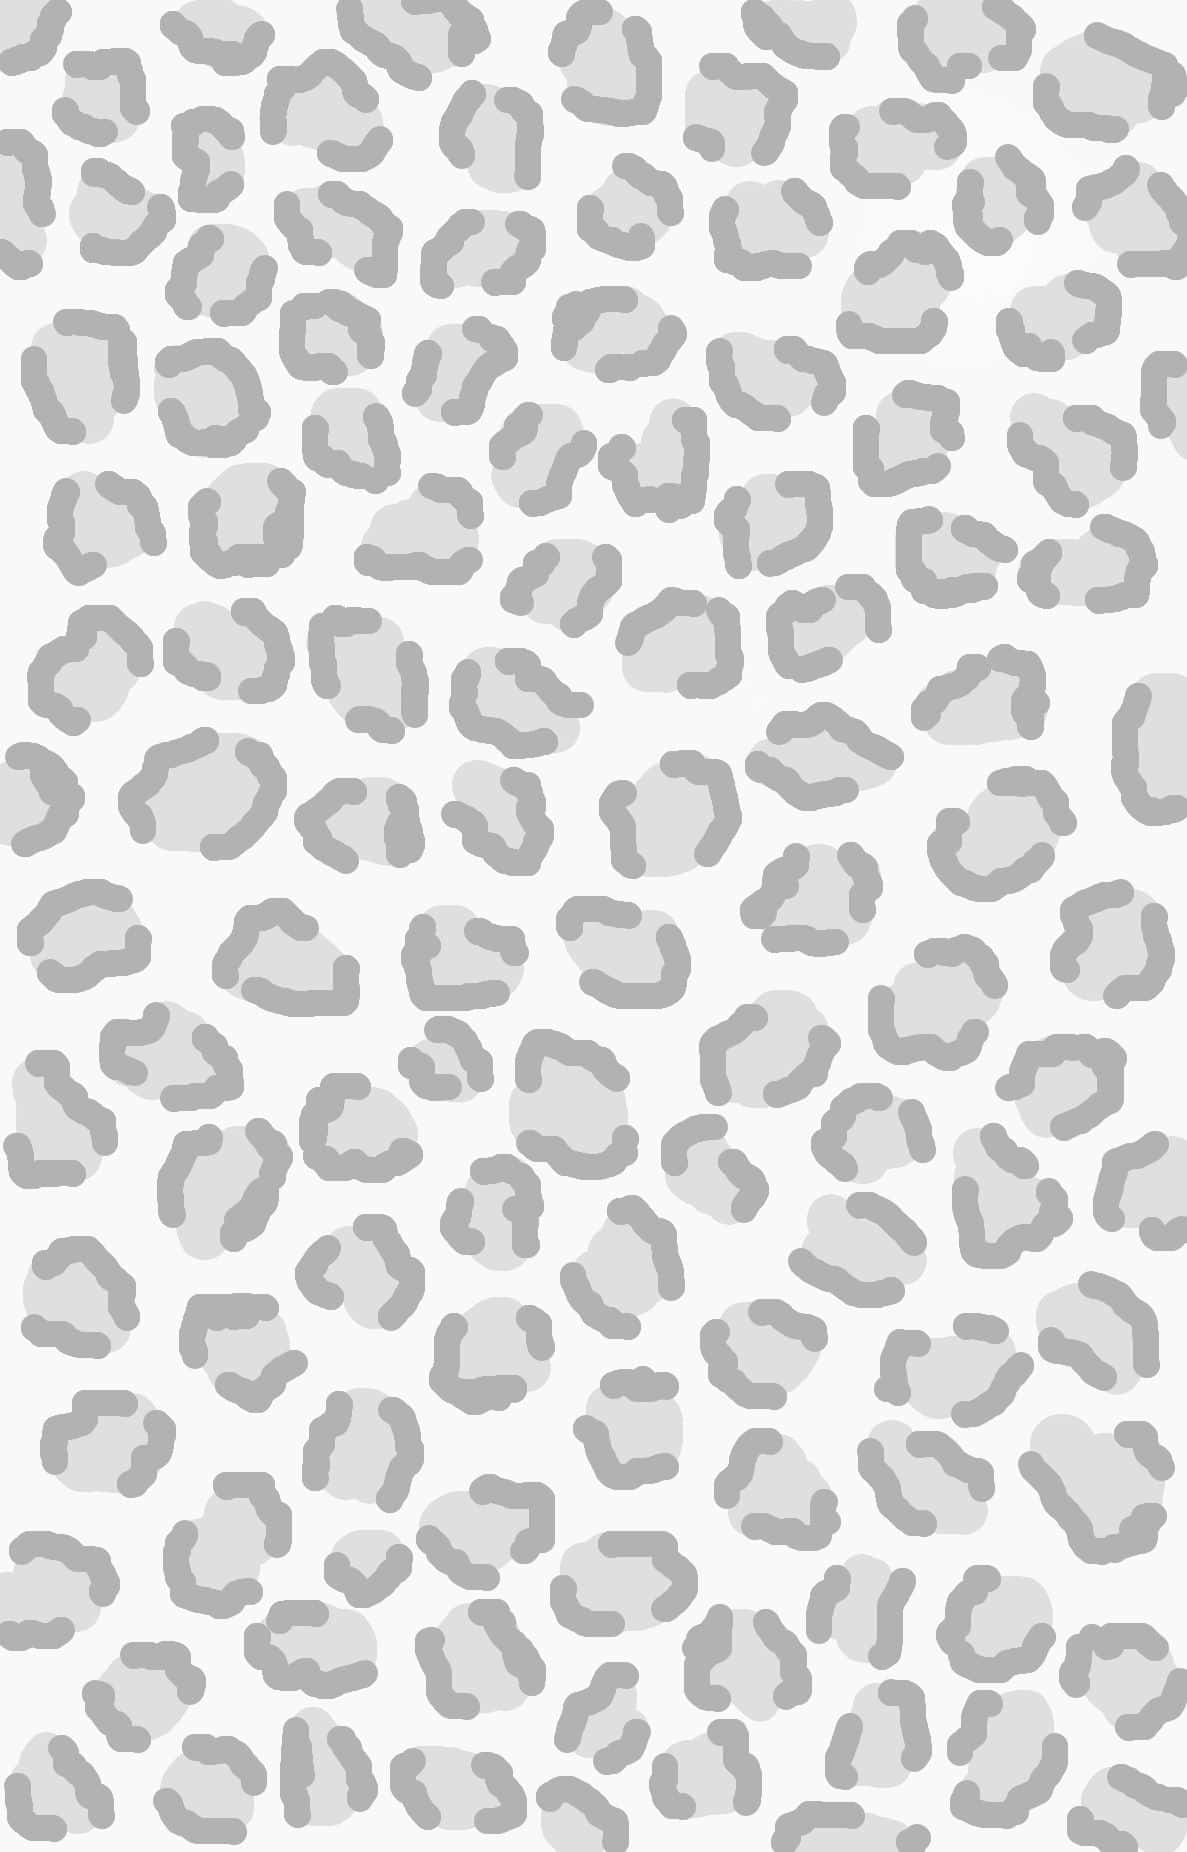 Cheetah Print Fabric Wallpaper and Home Decor  Spoonflower